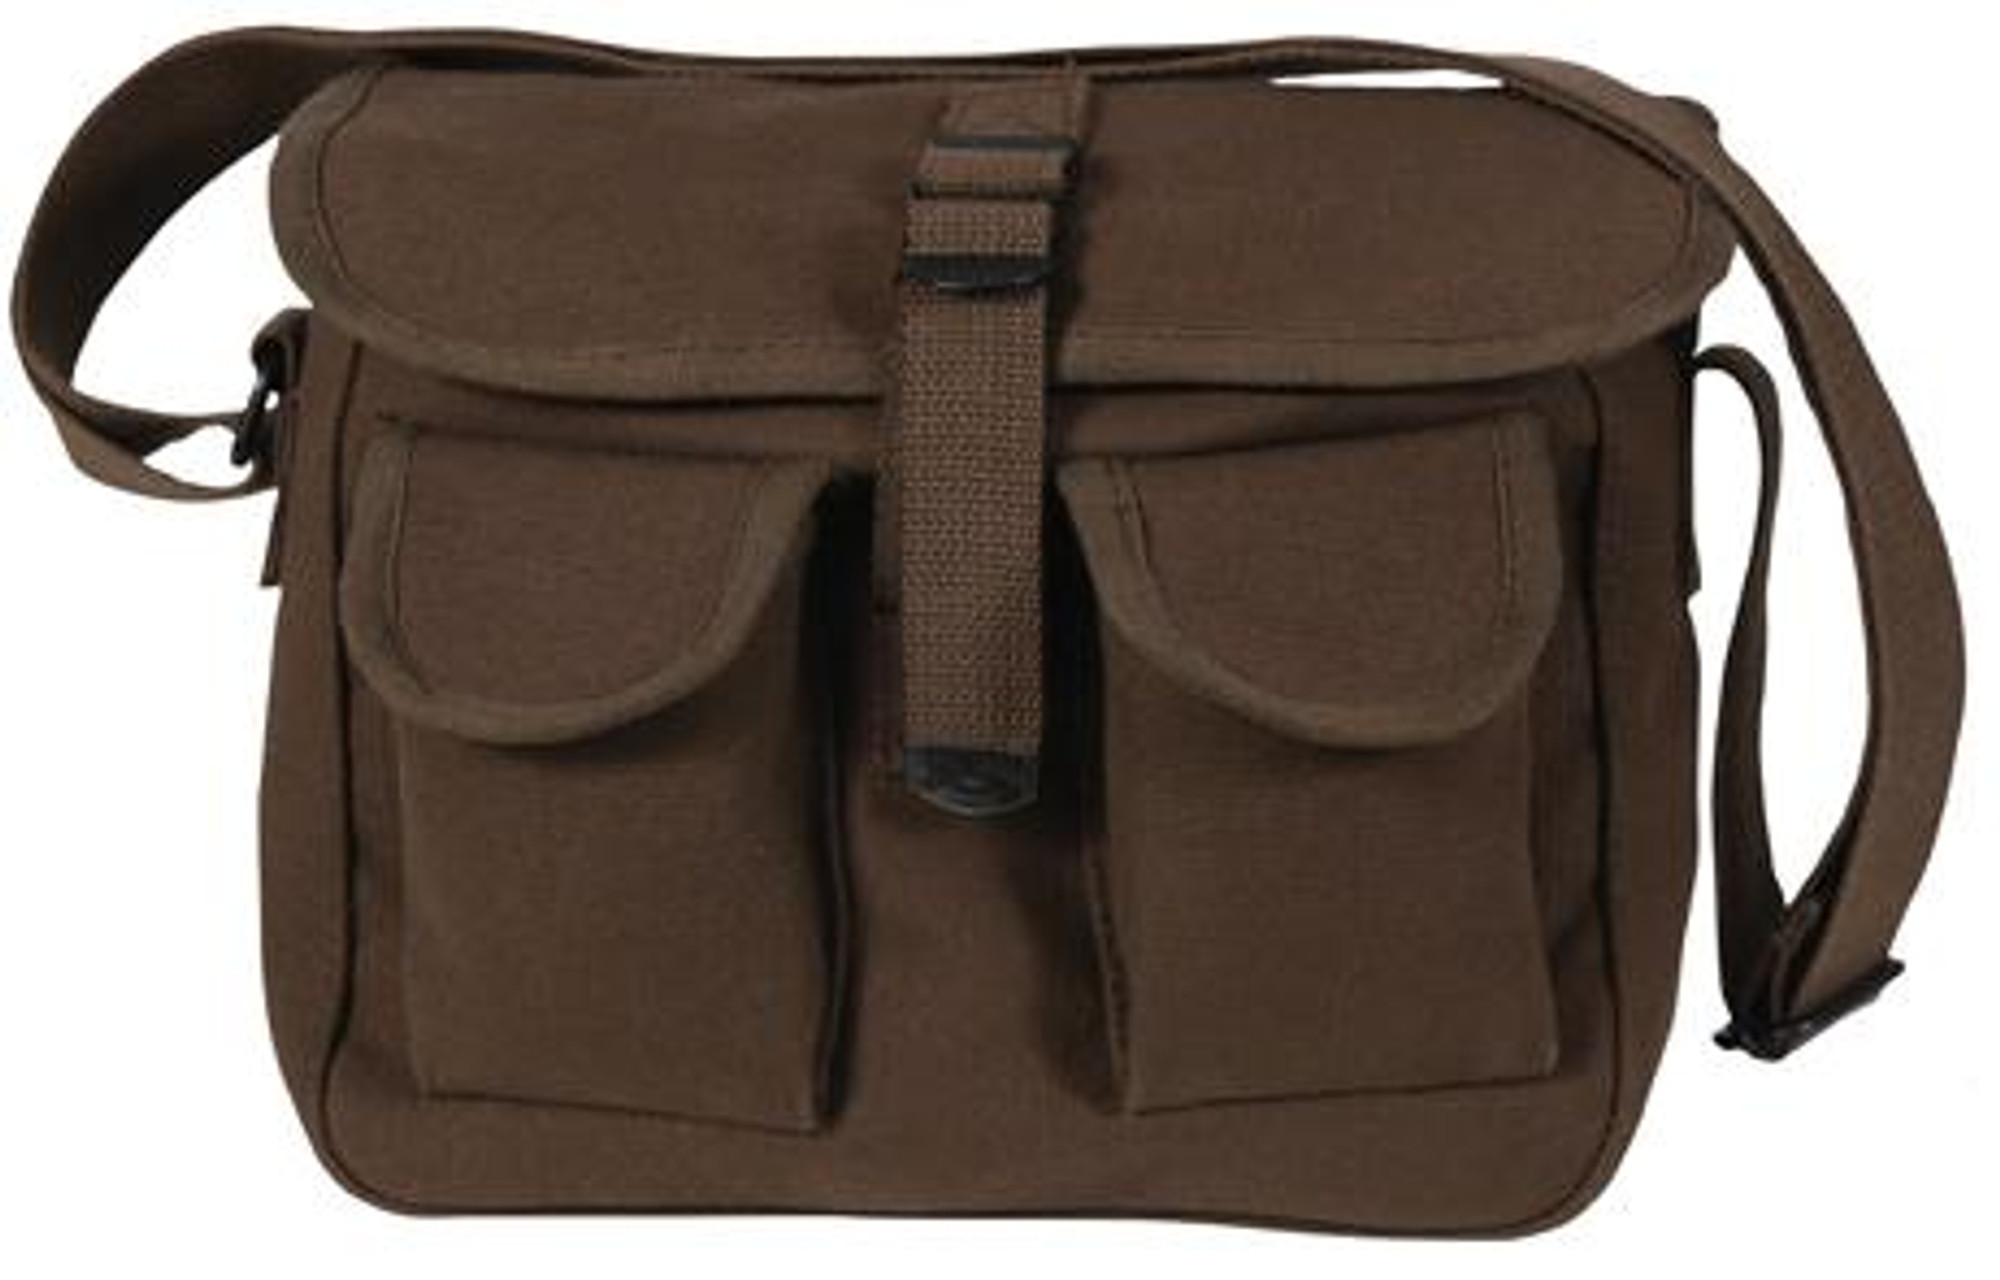 Rothco Canvas Ammo Shoulder Bag - Brown